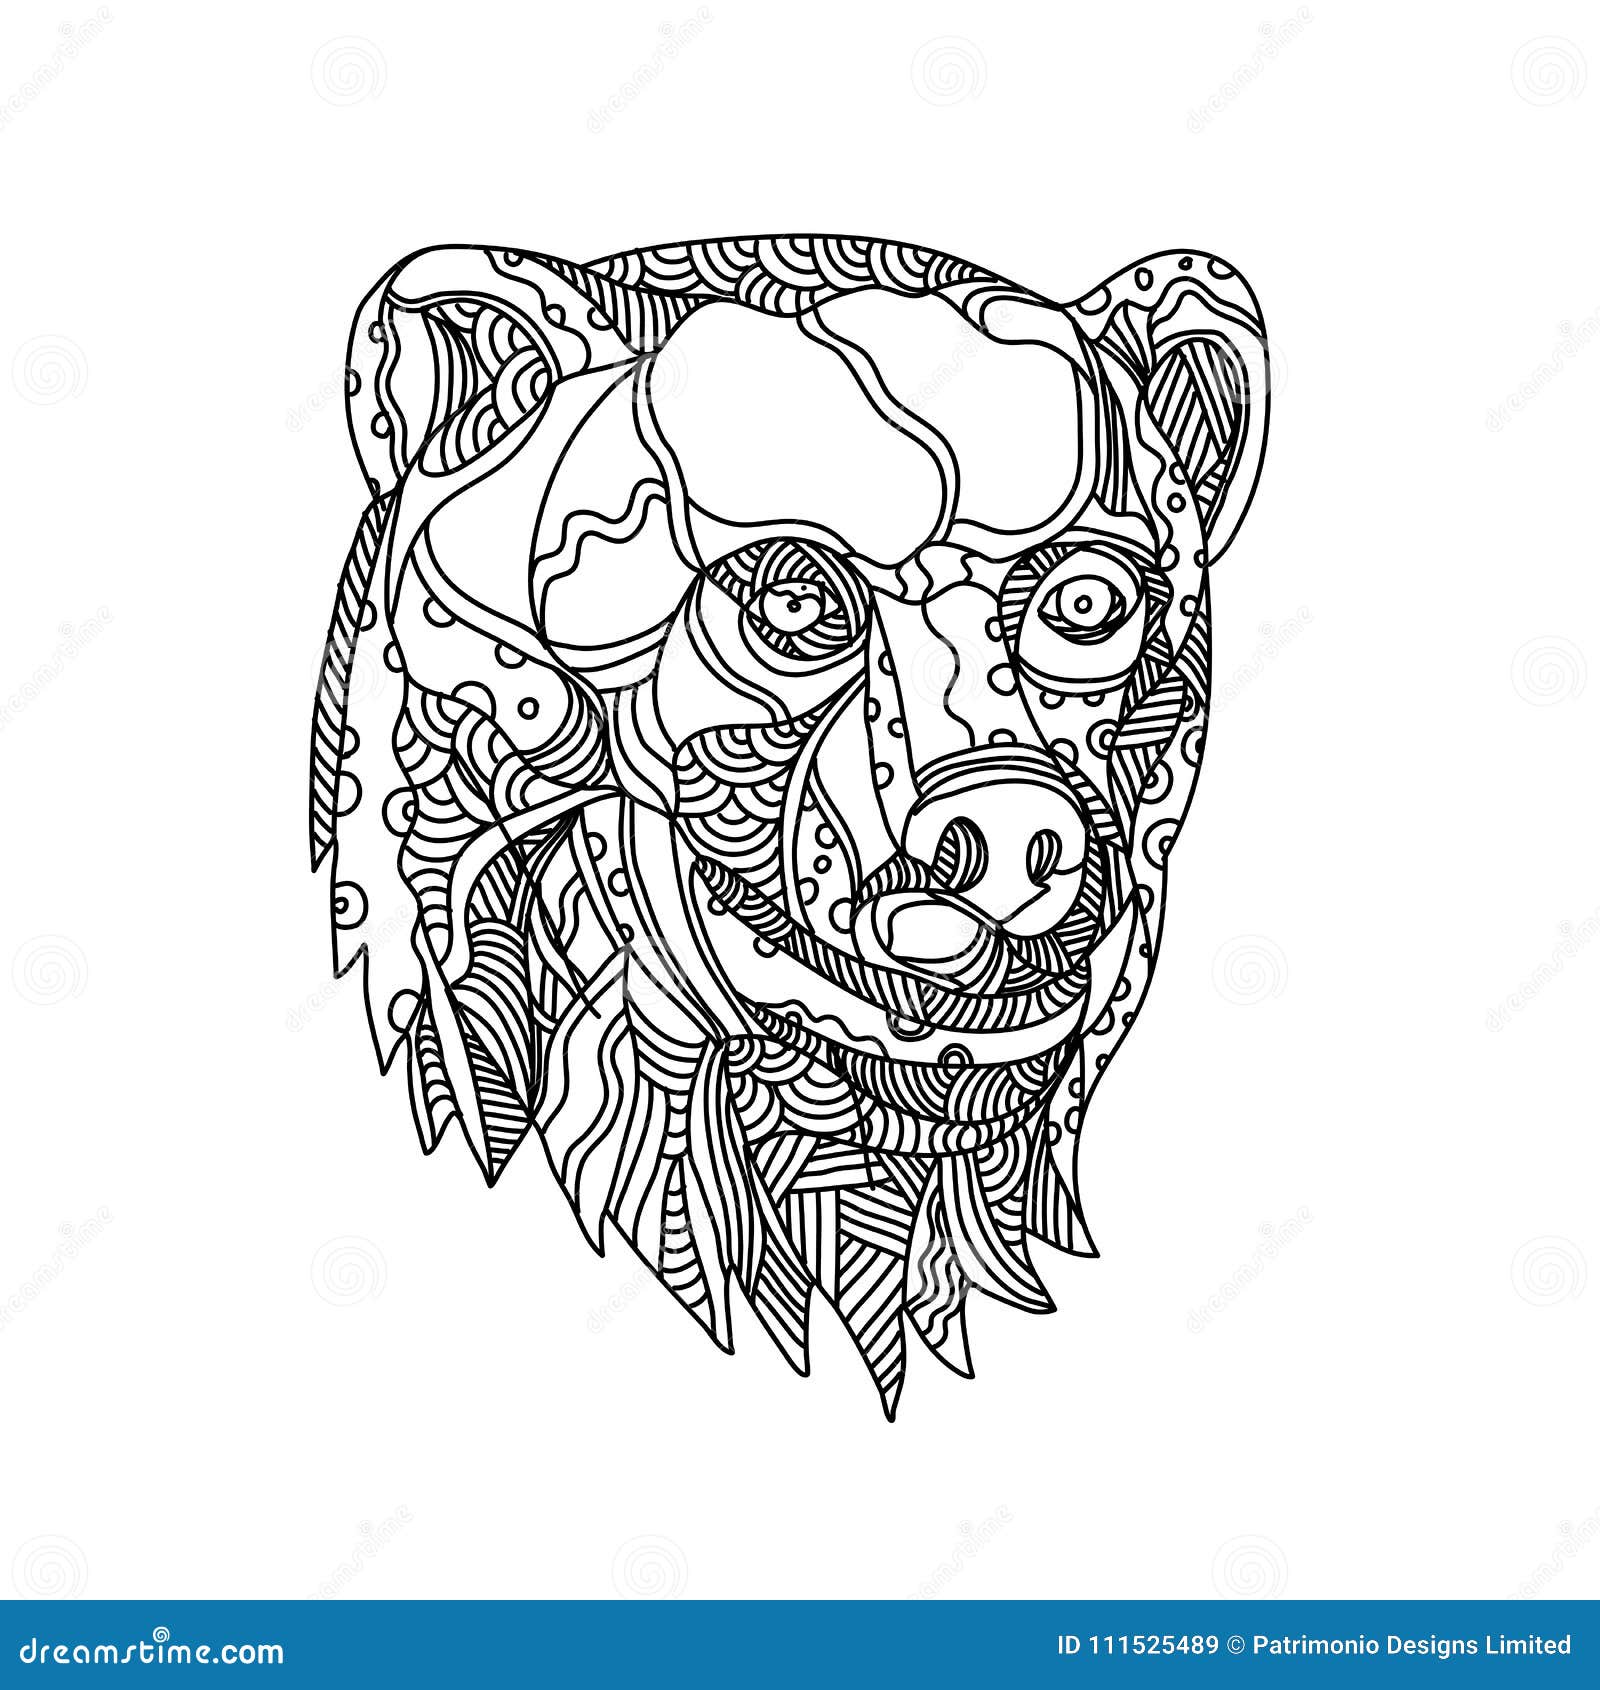 brown bear head doodle